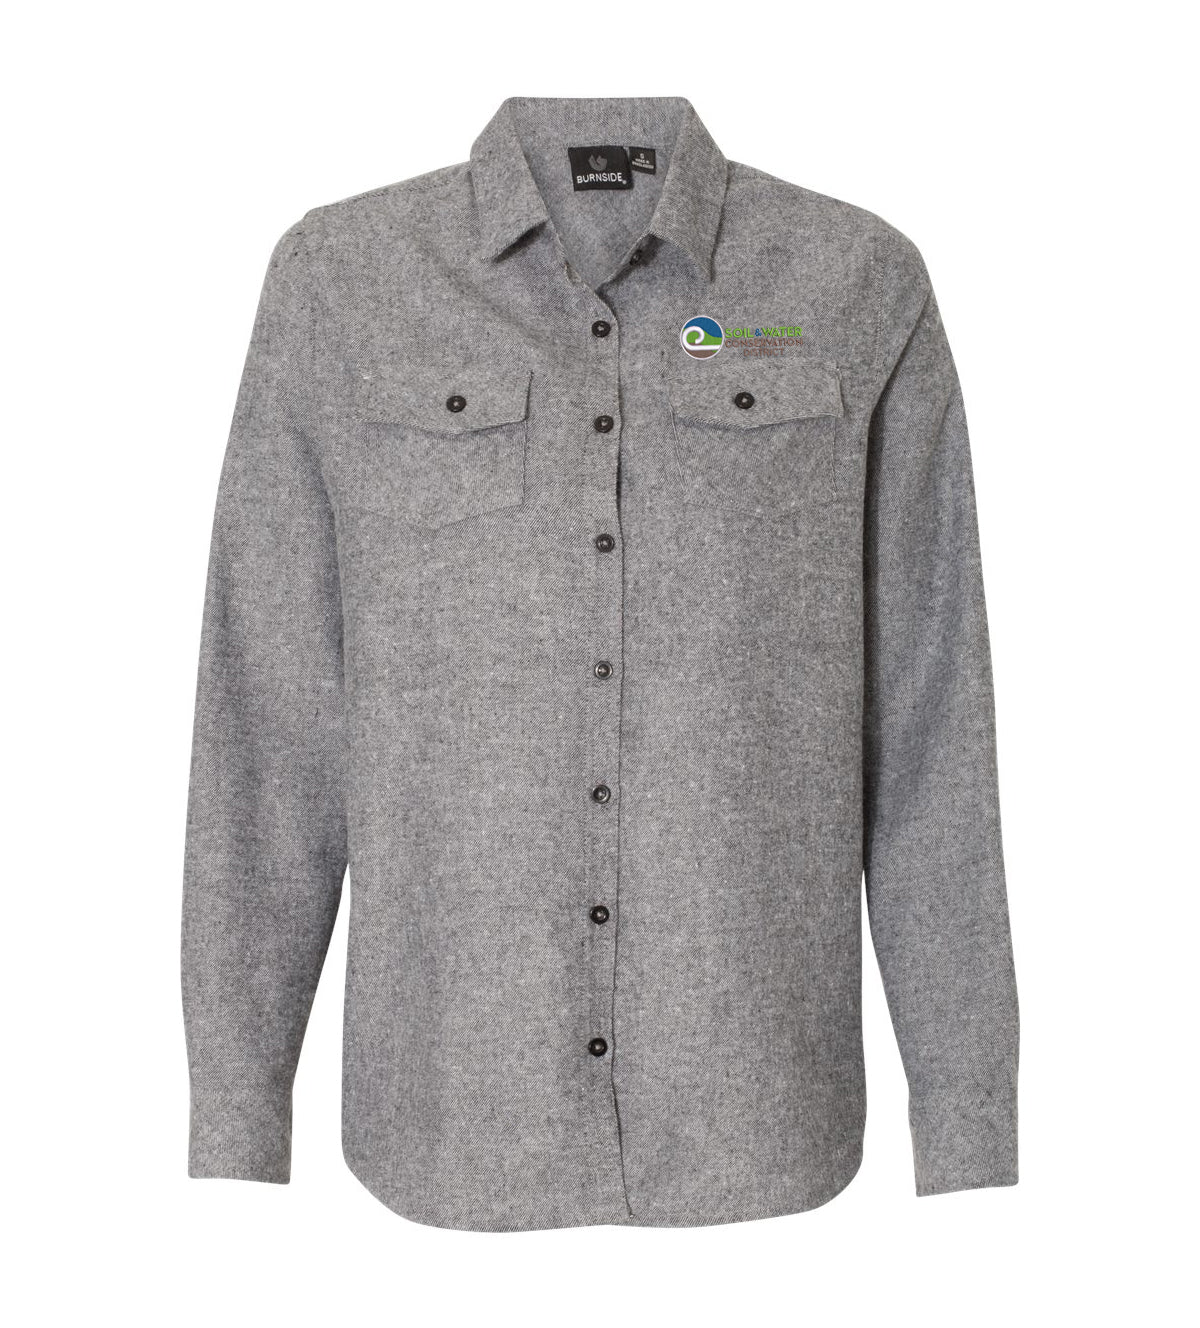 Women's Burnside - Solid Long Sleeve Flannel Shirt - 5200